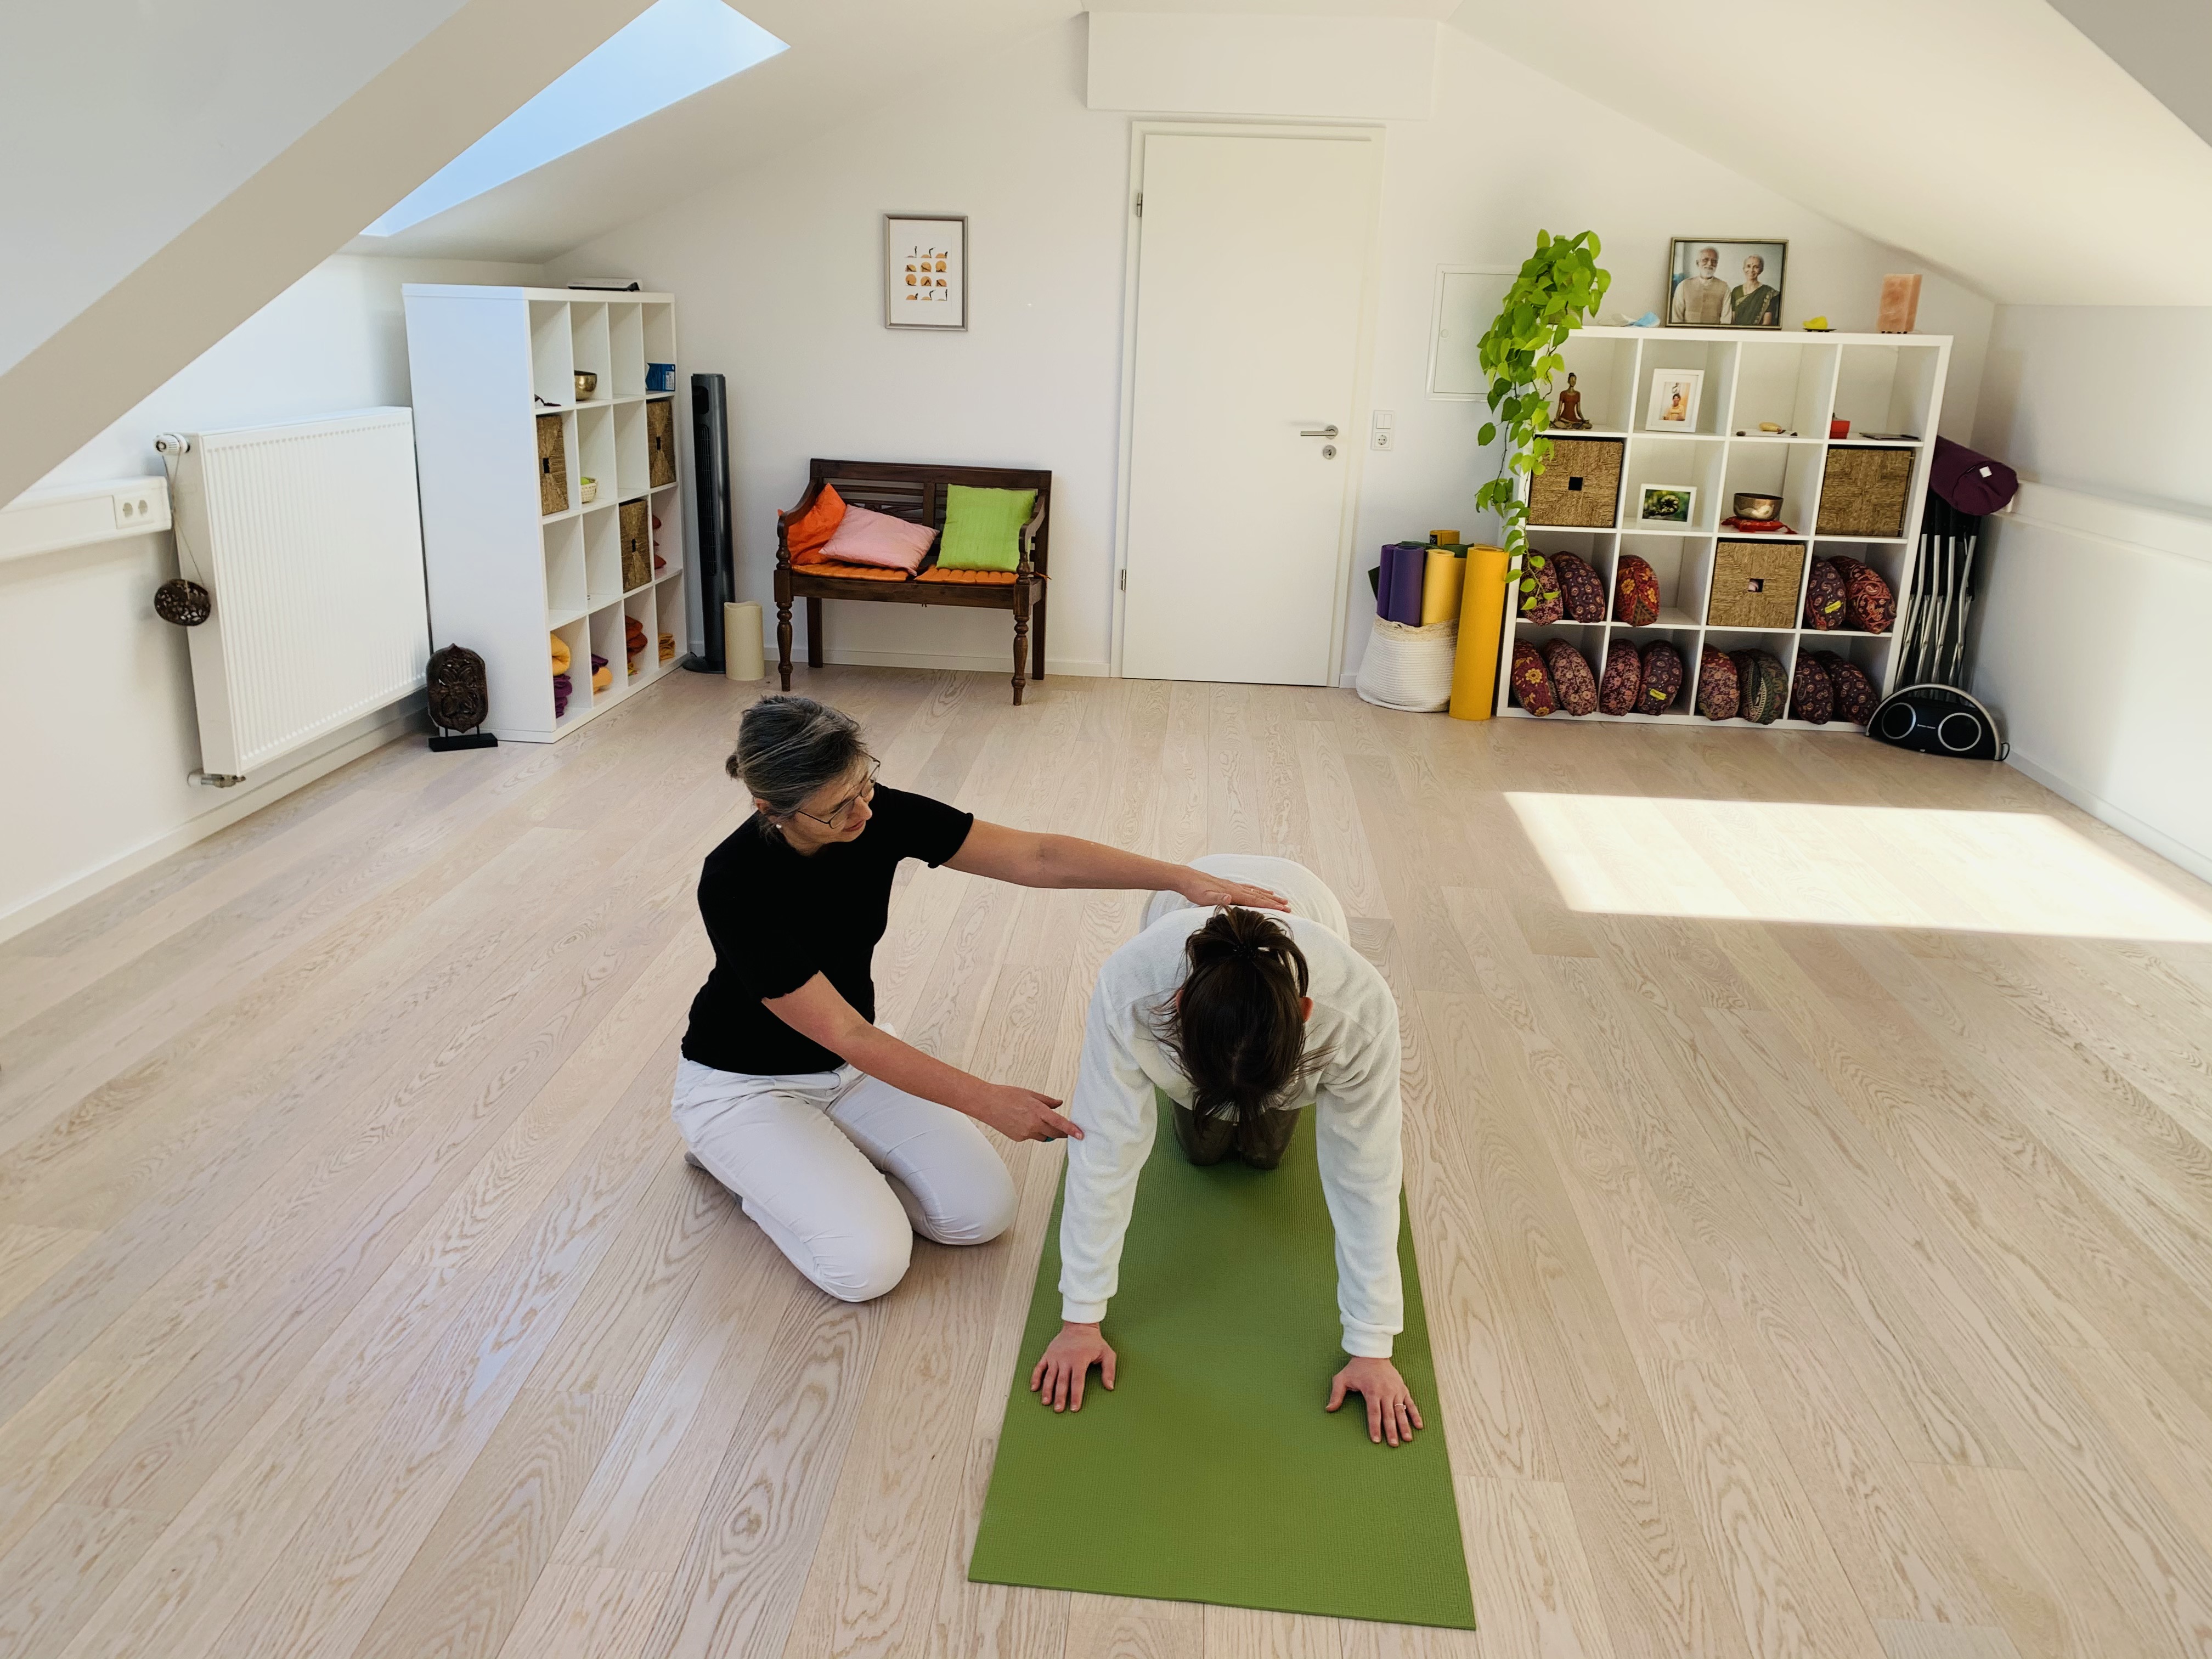 Anja leitet yogatherapeutische Übungen an.